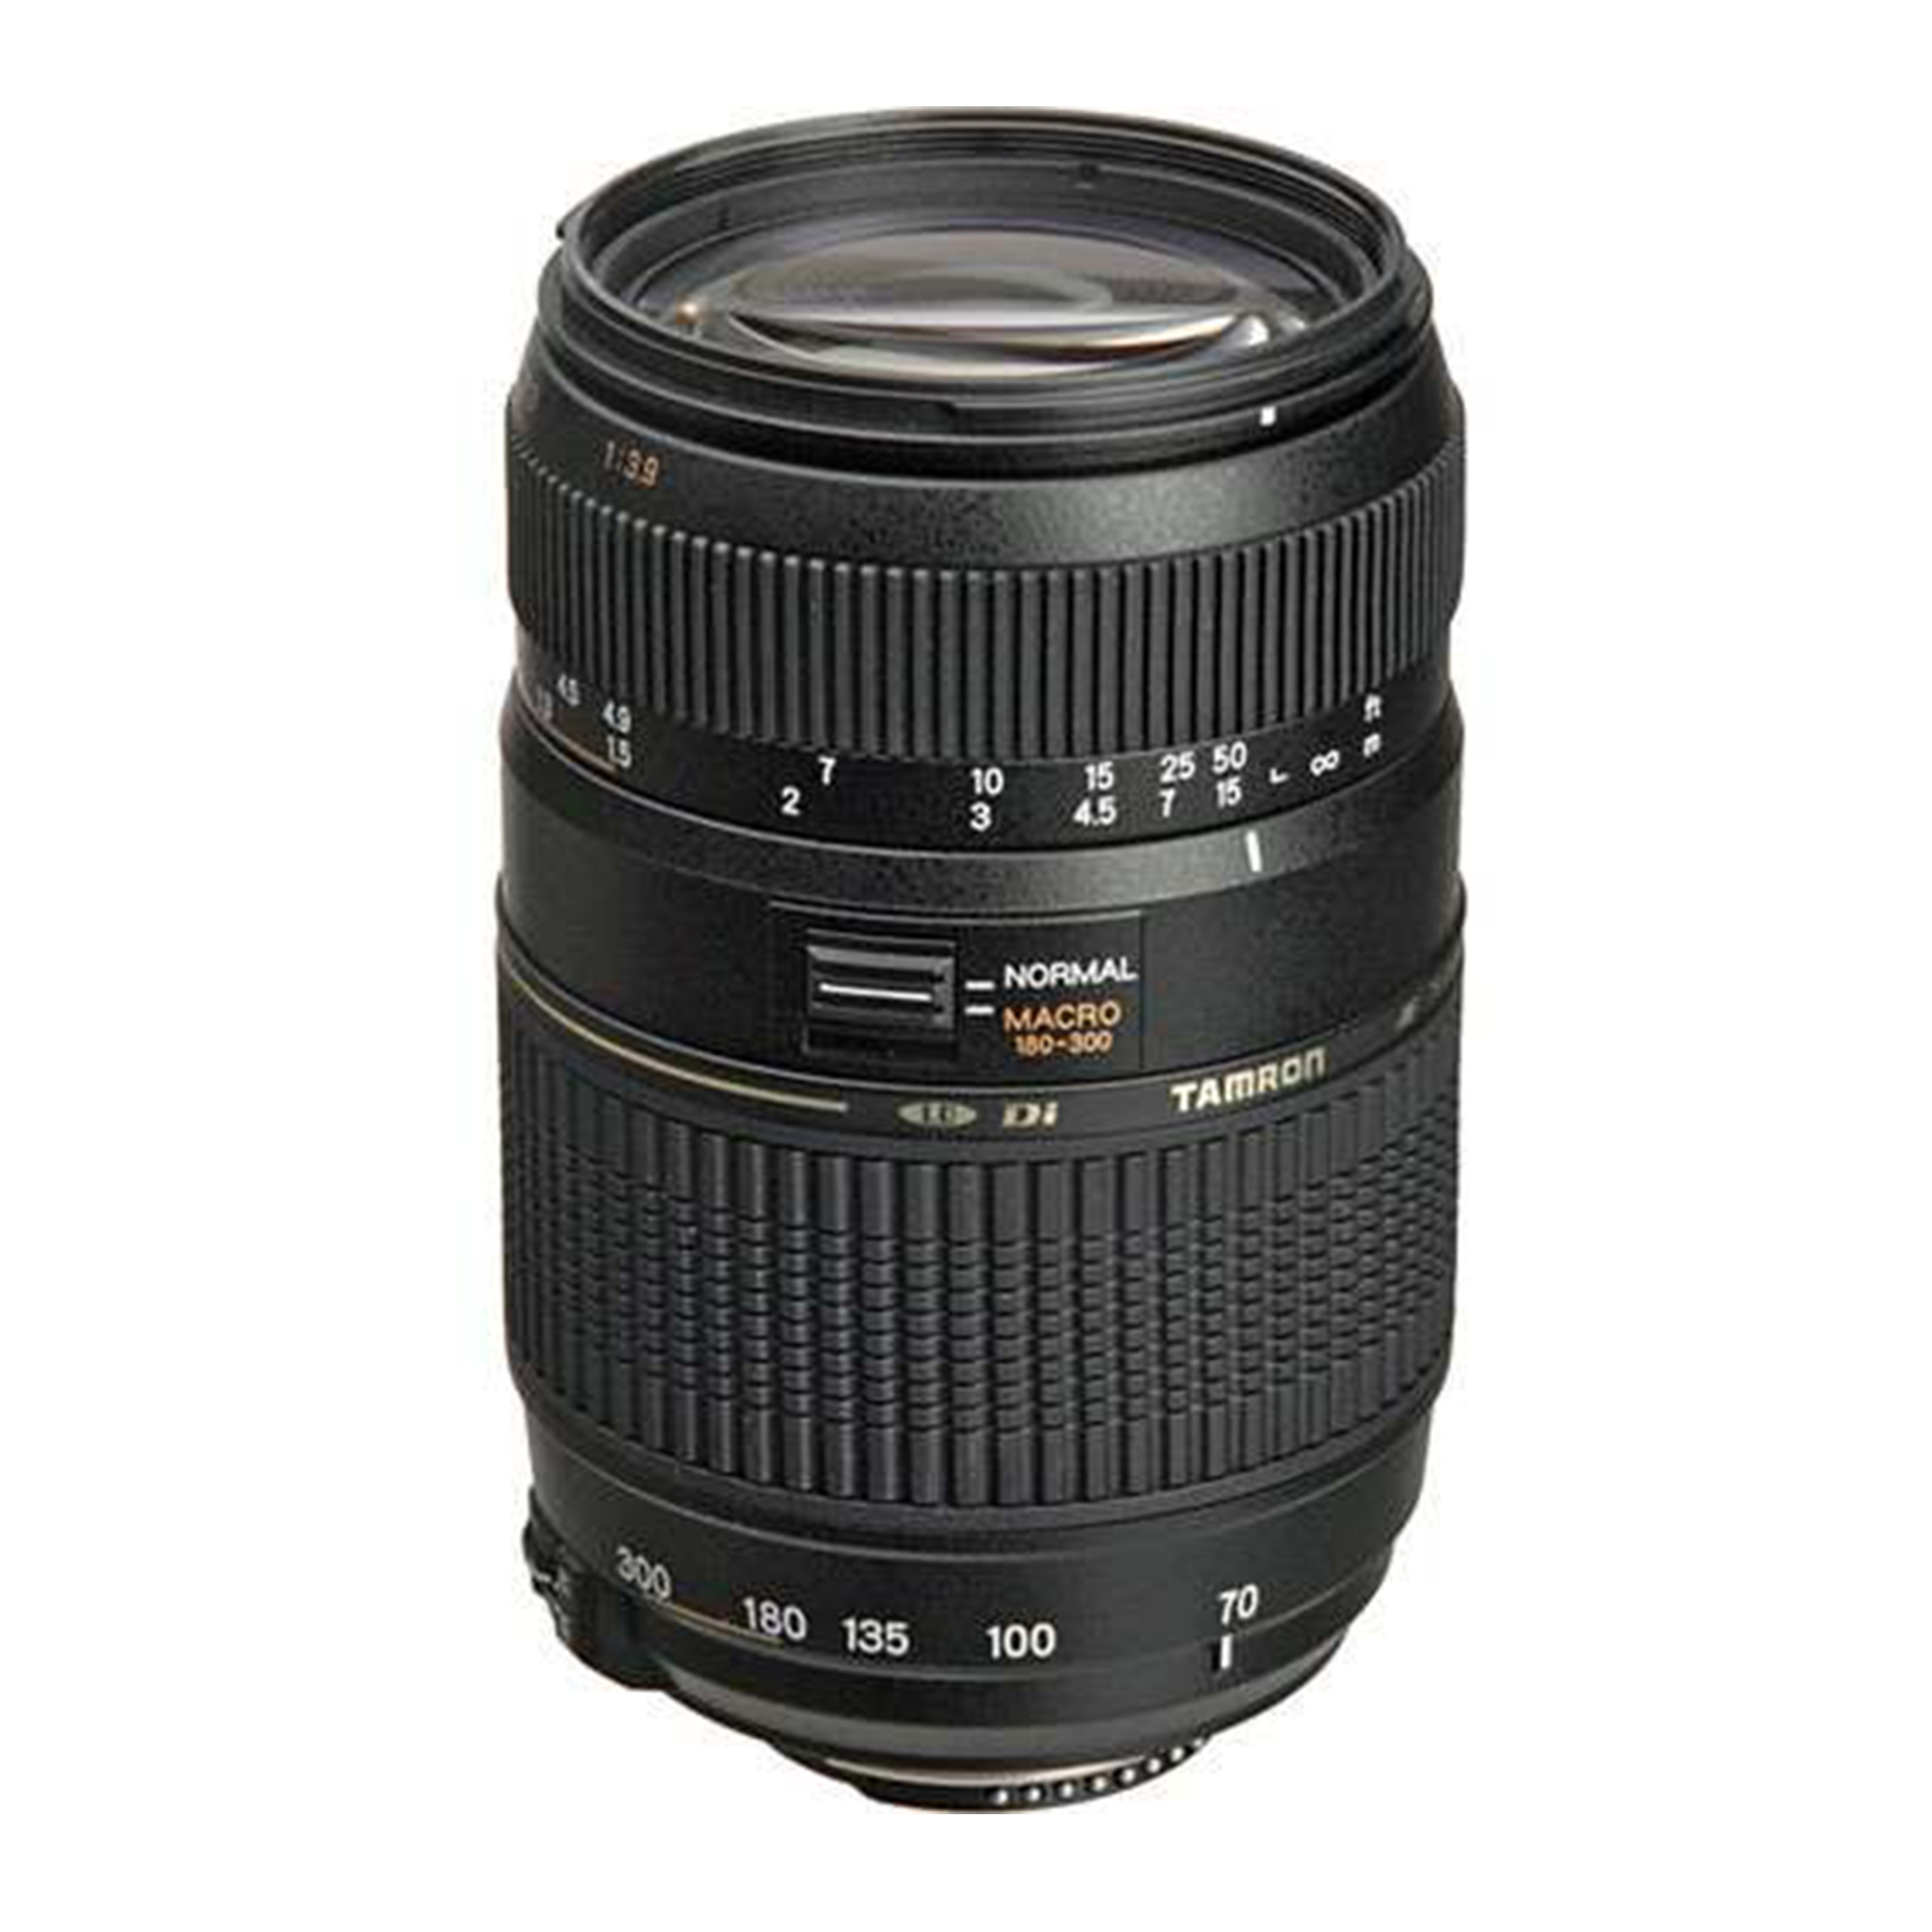 Tamron 70-300mm f/4-5.6 Di LD Macro Autofocus Lens For Nikon